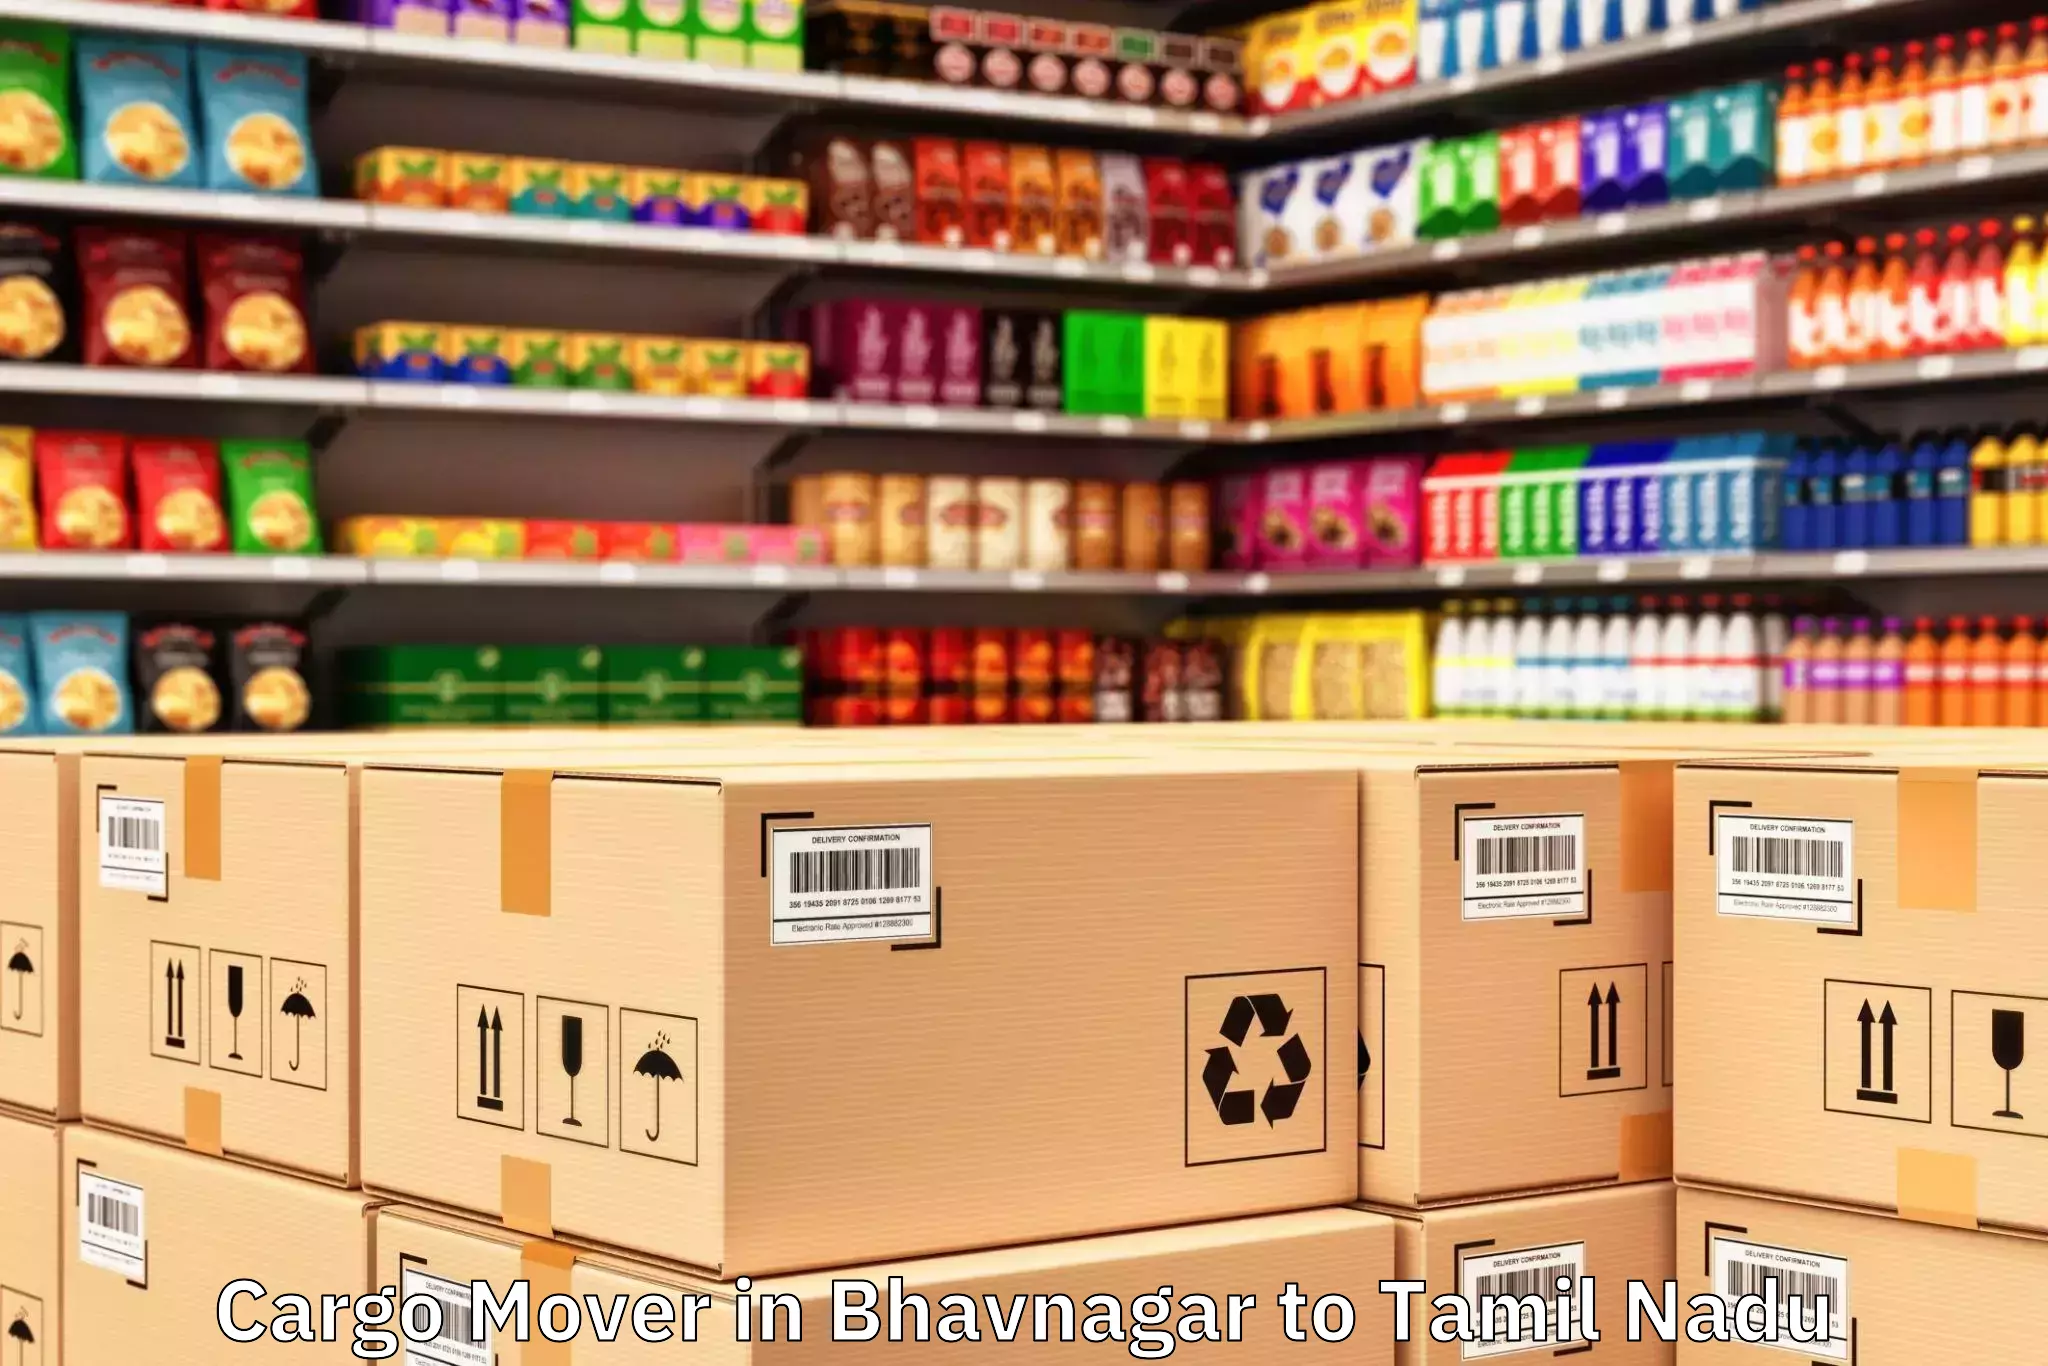 Trusted Bhavnagar to Ambattur Industrial Estate Cargo Mover